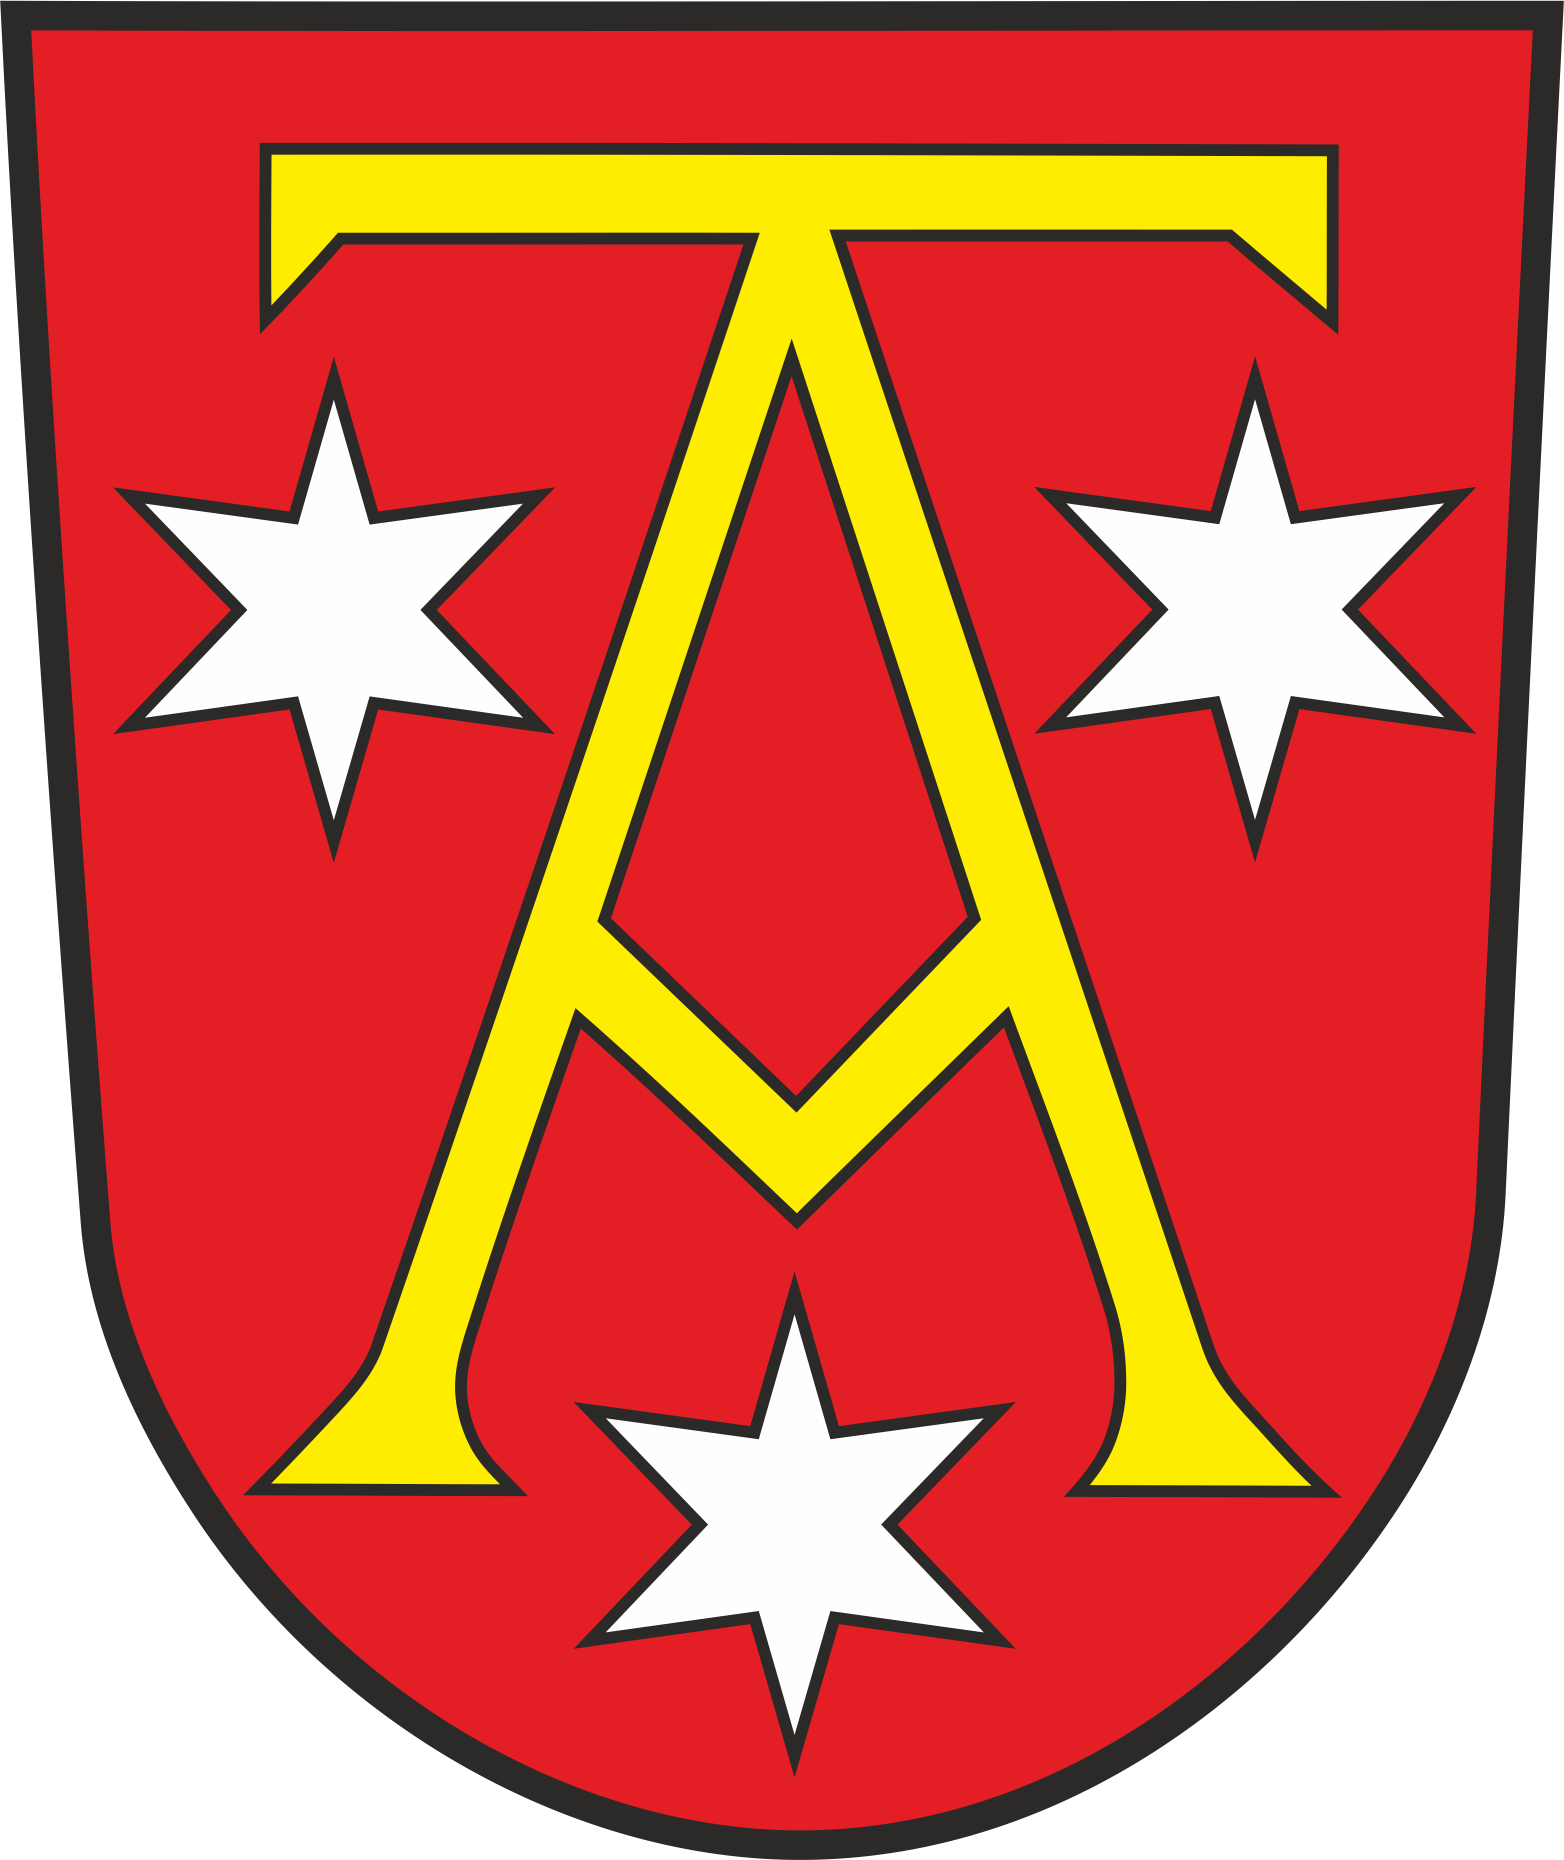 Wappen Geiselbach